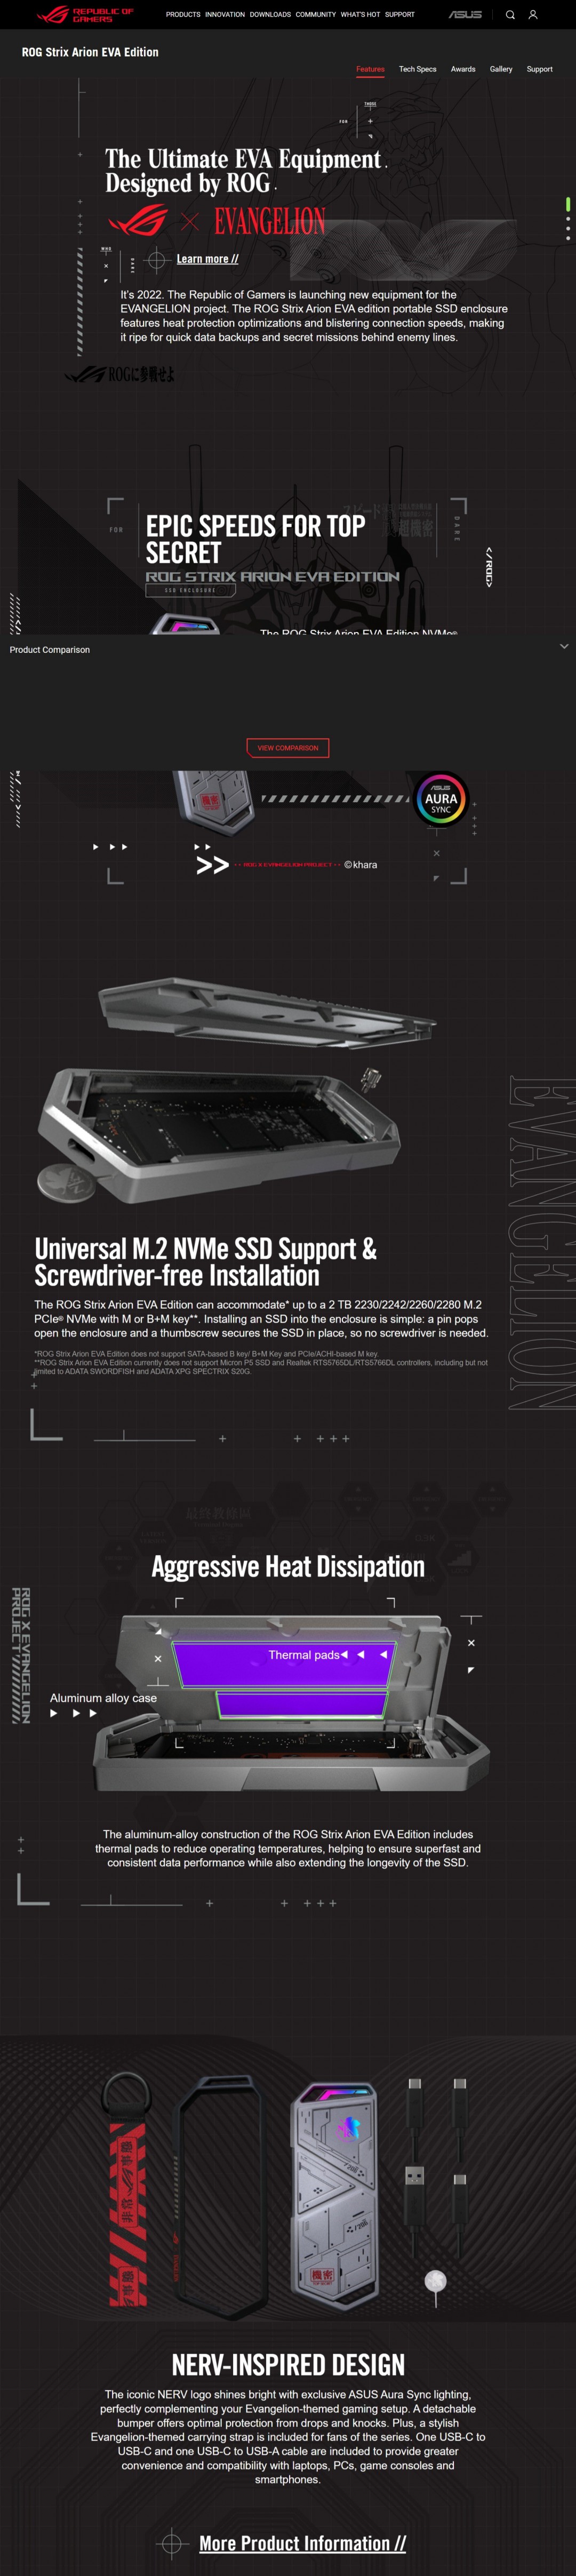  ASUS ROG Strix Arion EVA Edition Portable SSD enclosure Review